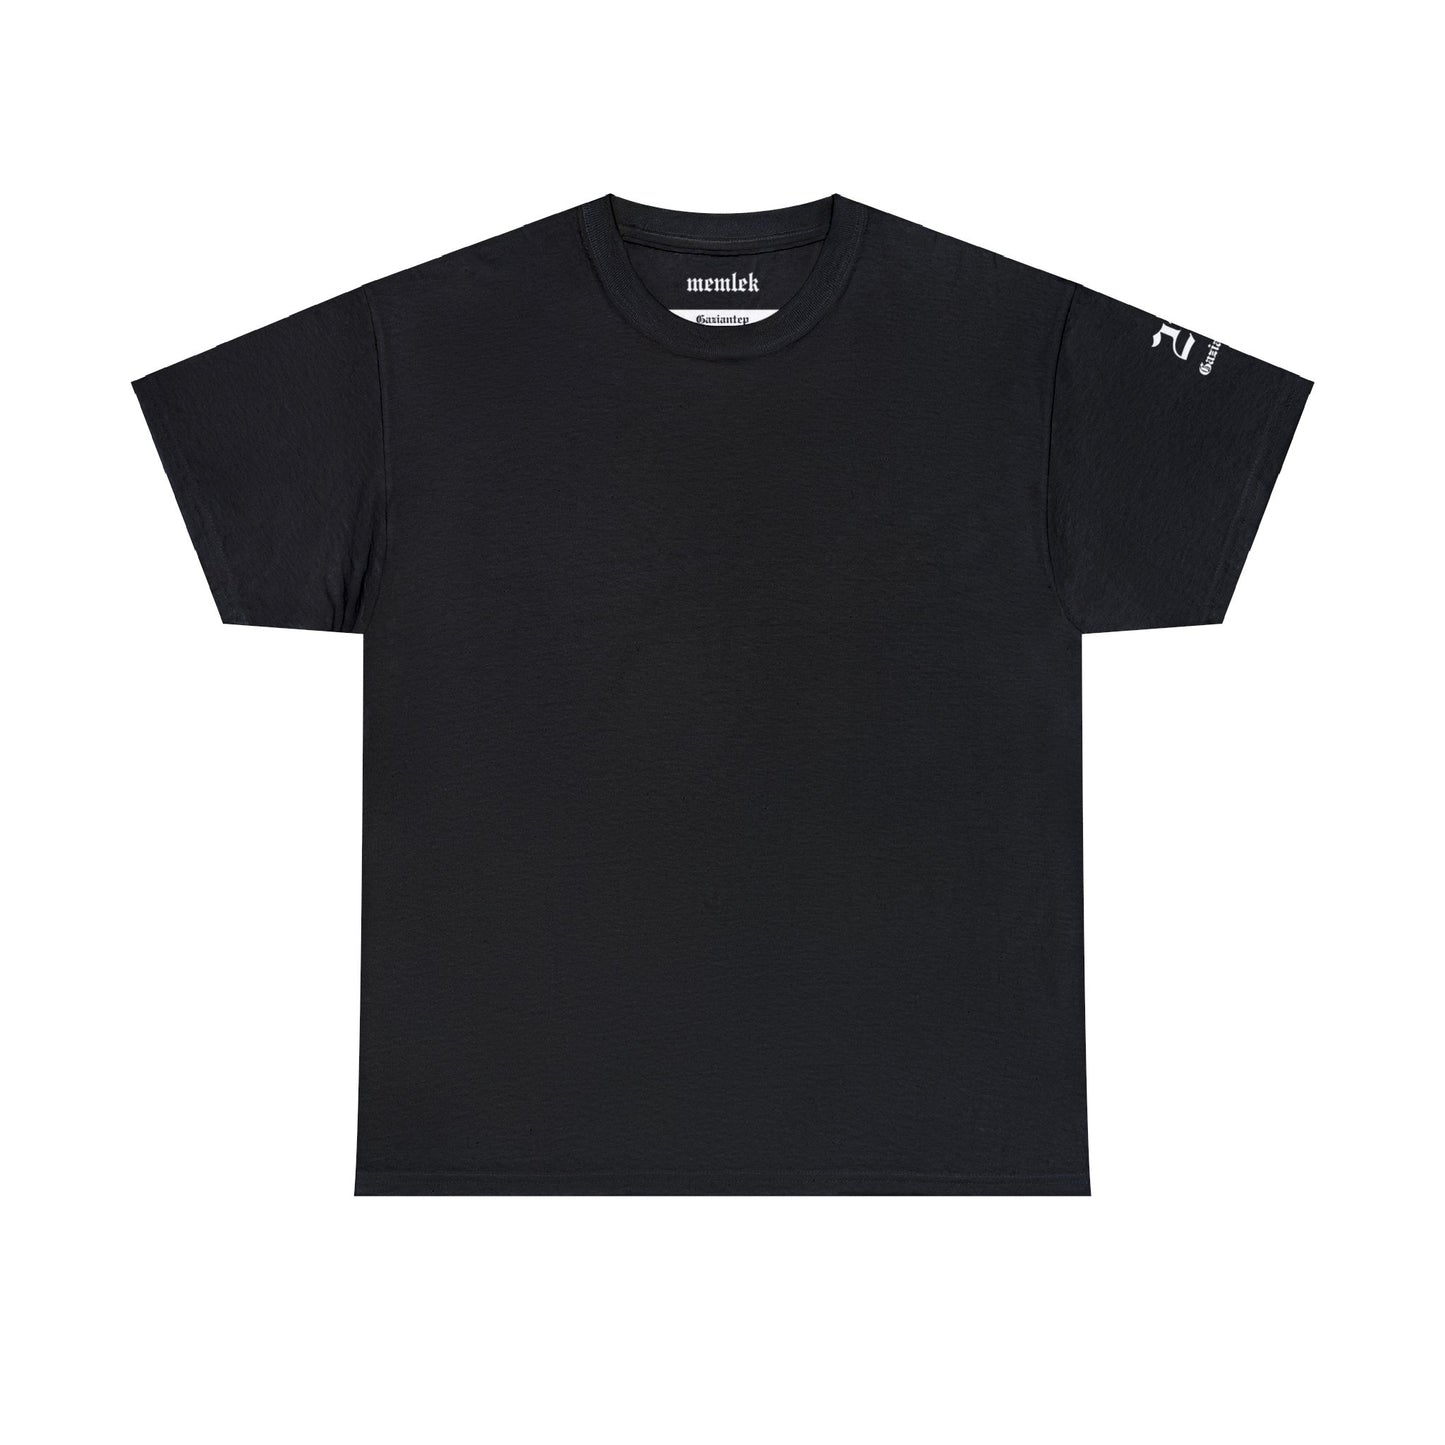 Şehirim - 27 Gaziantep - T-Shirt - Back Print - Black